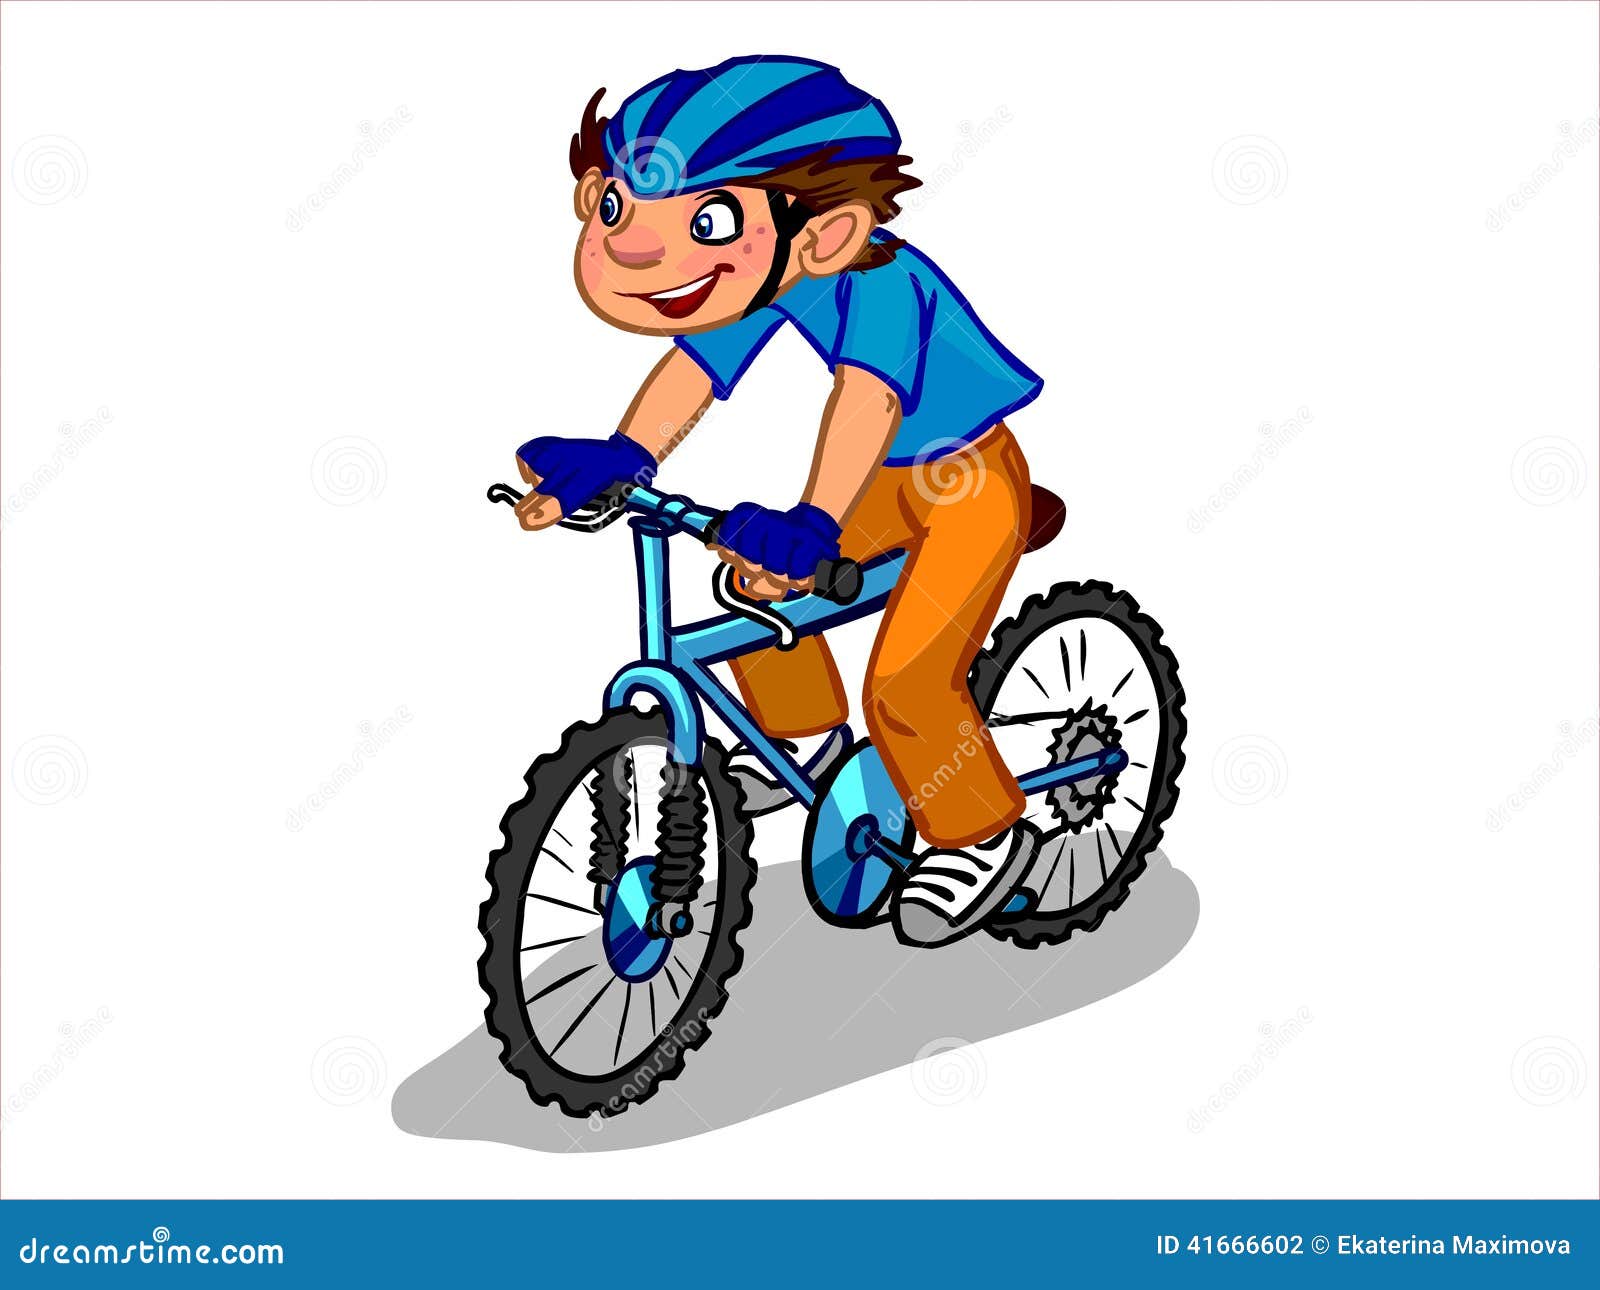 clipart boy on bike - photo #30